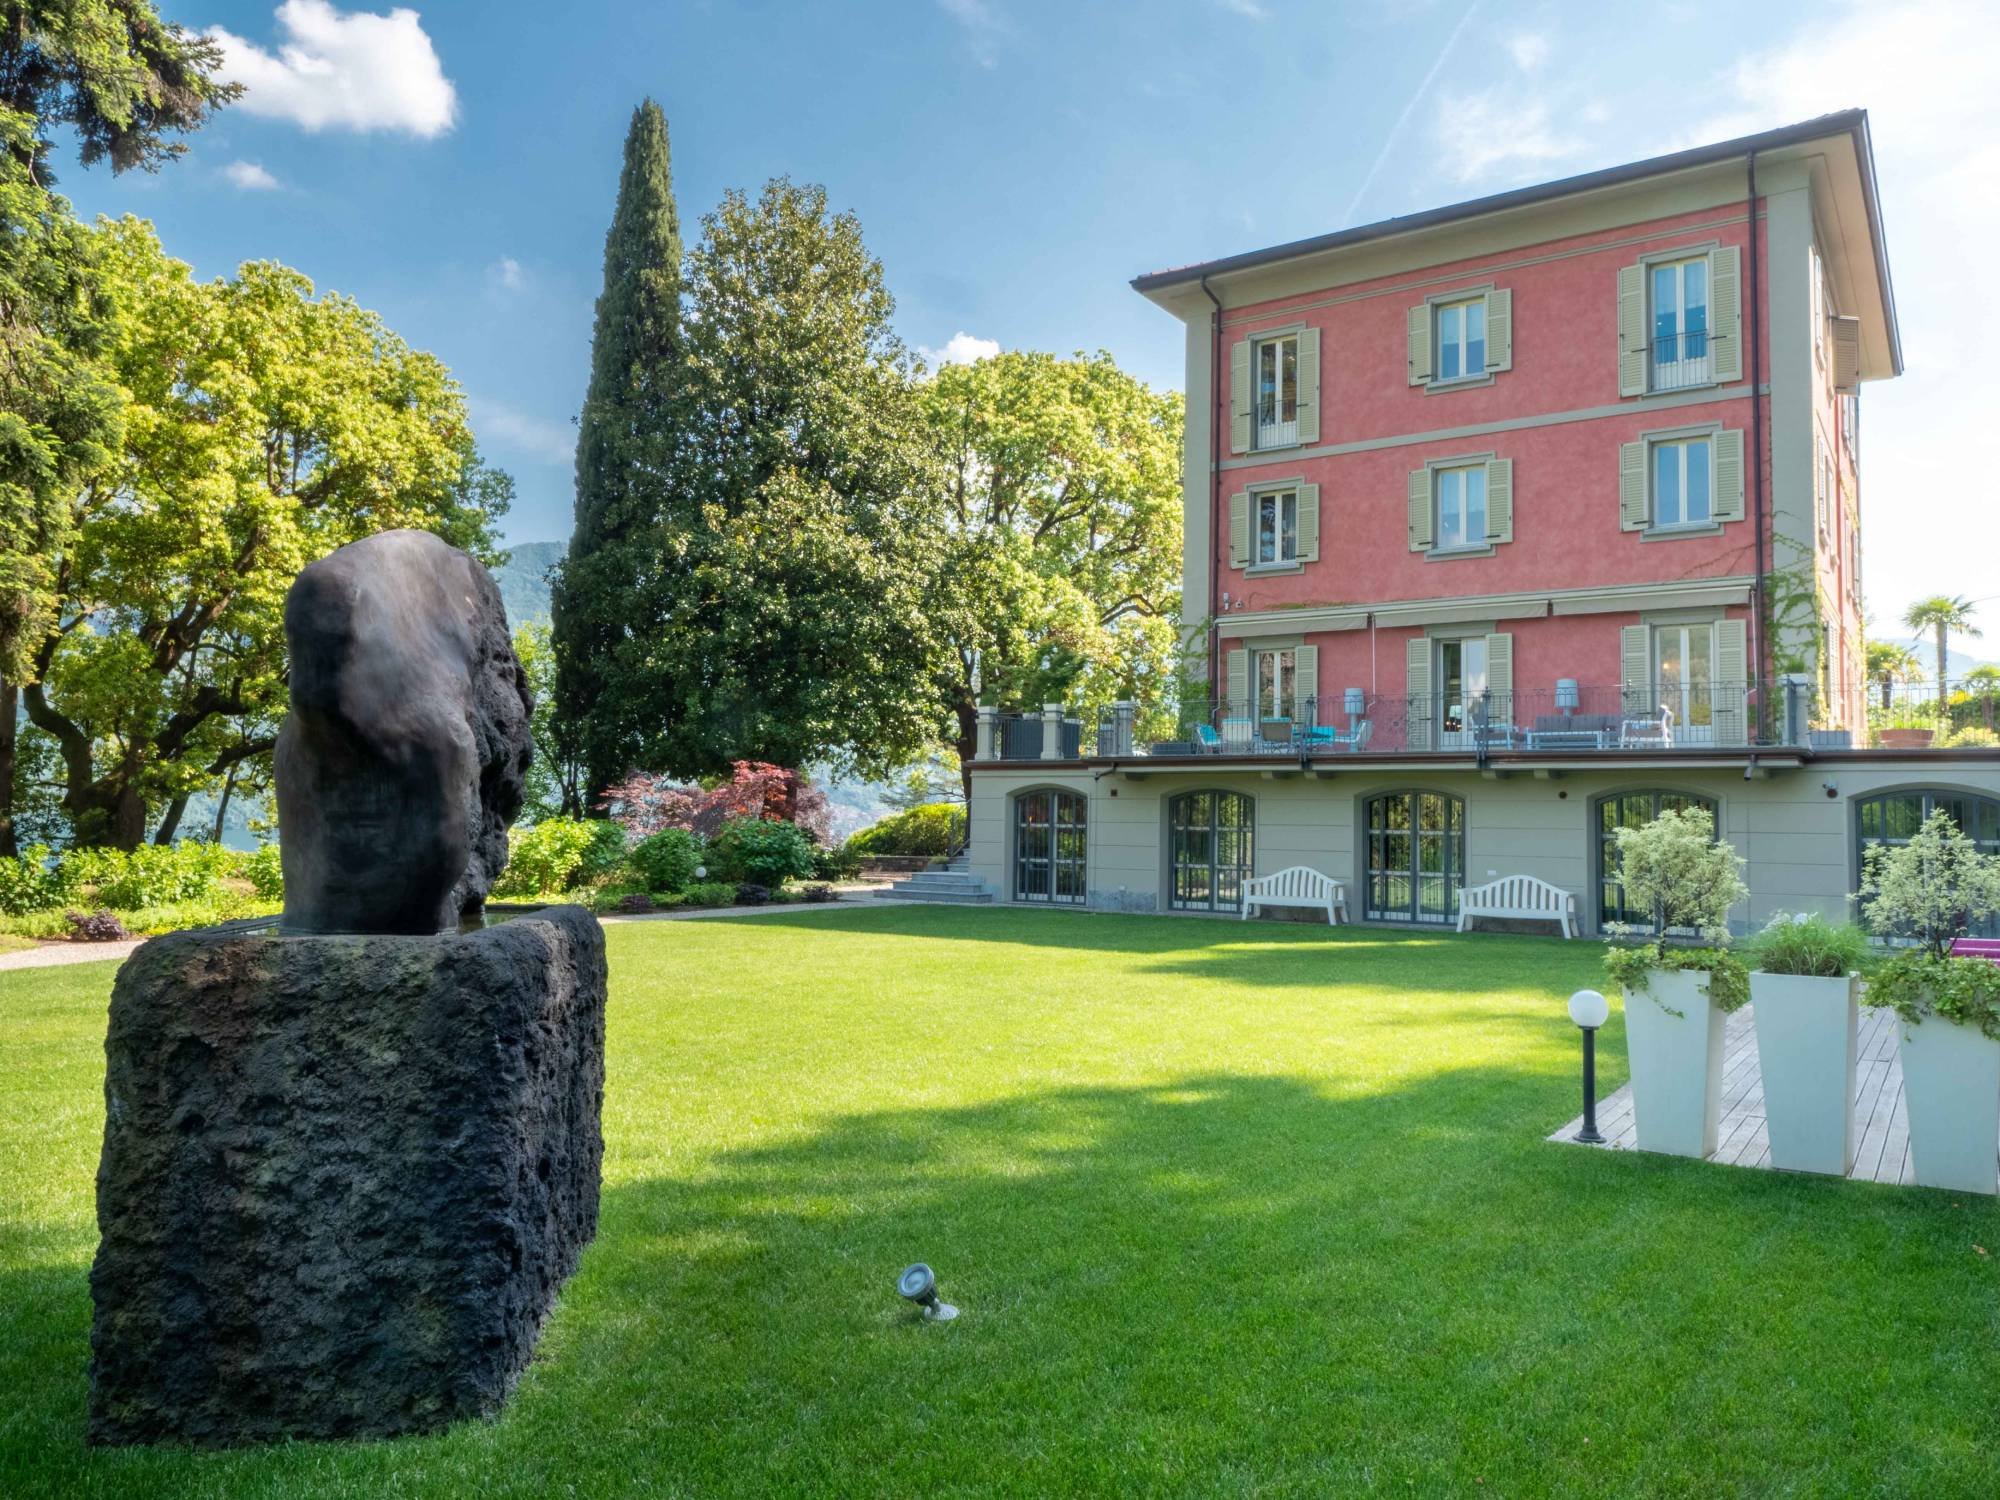 Francis York 2 Restored Italian Villa in Tremezzina, Lake Como 7.jpeg